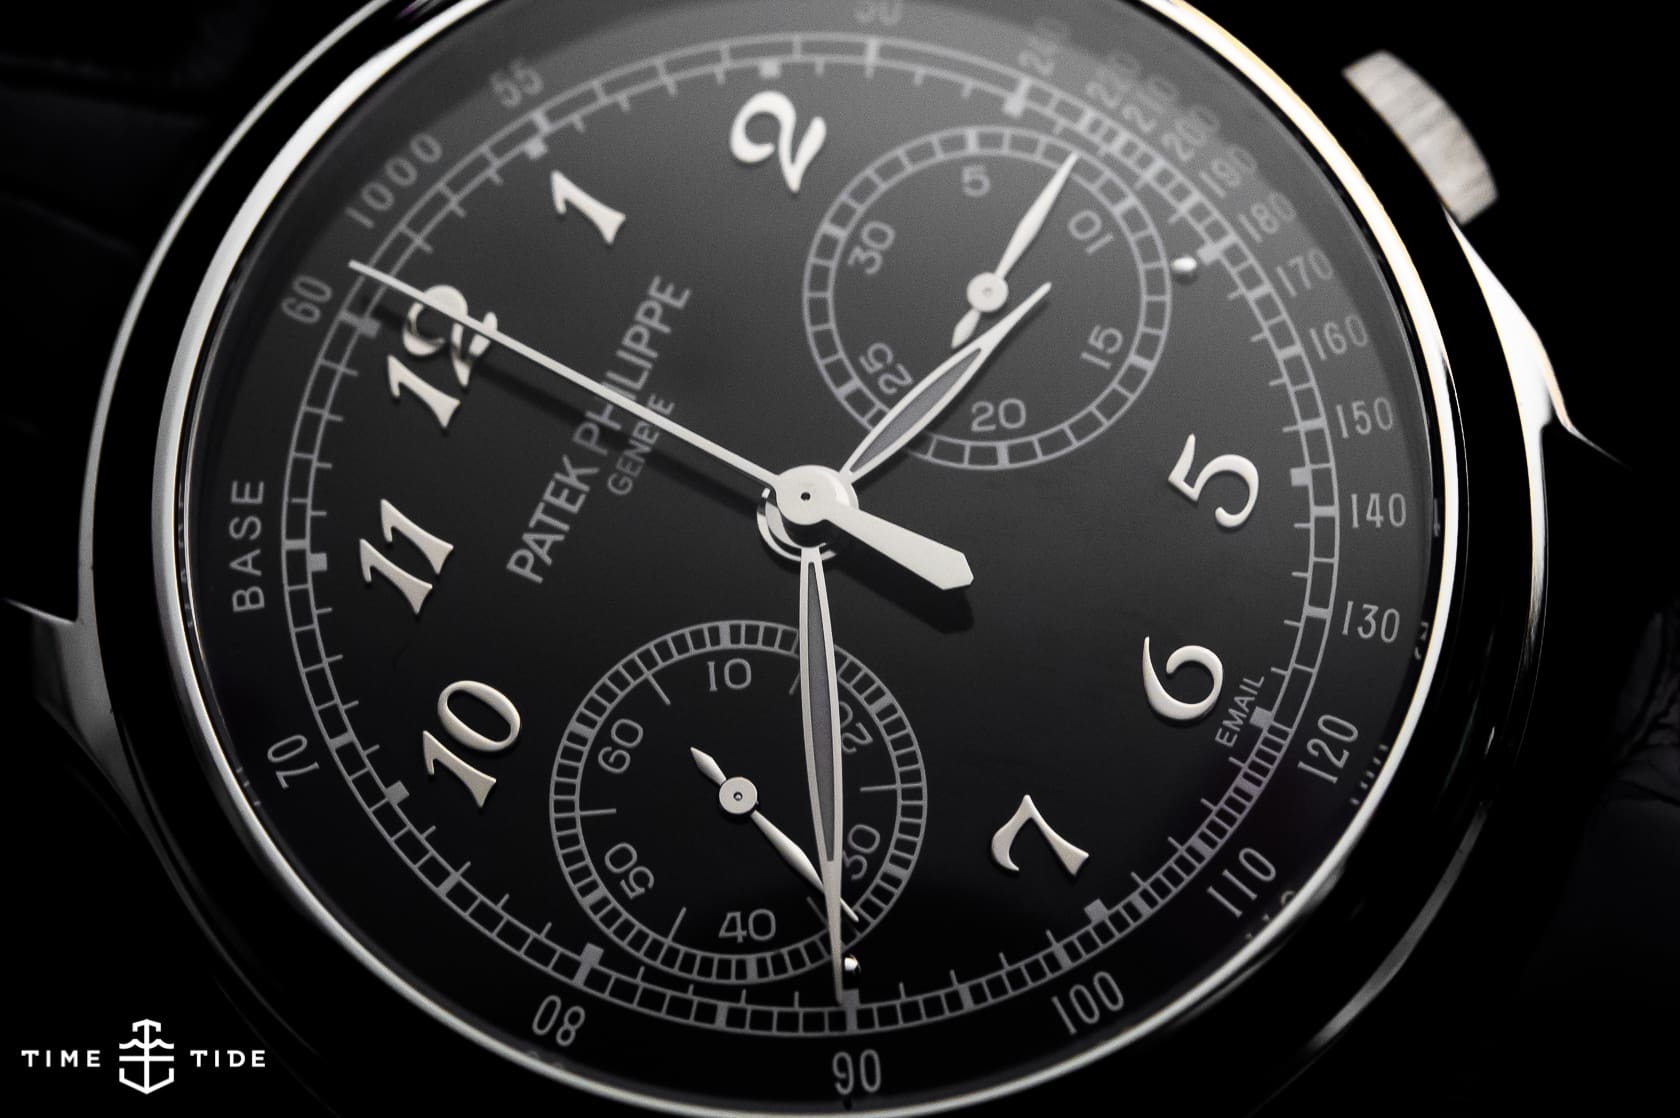 HANDS-ON: The Patek Philippe split-seconds chronograph Ref.5370P